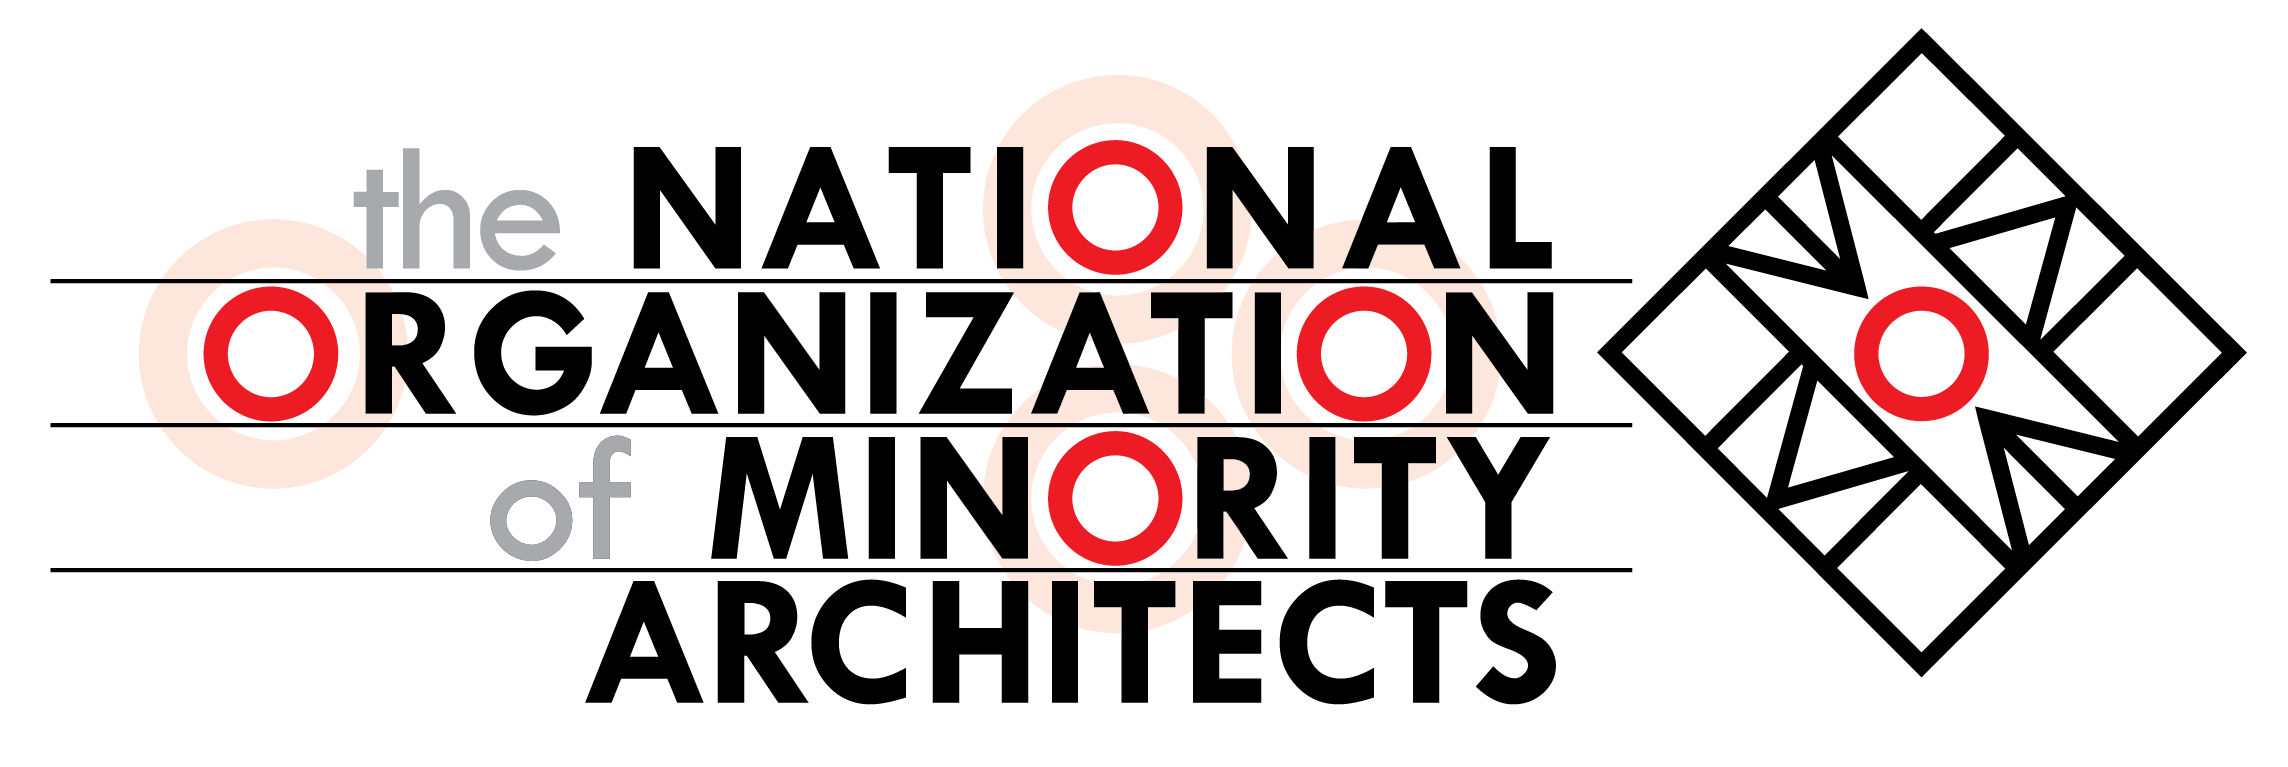 NOMA logo